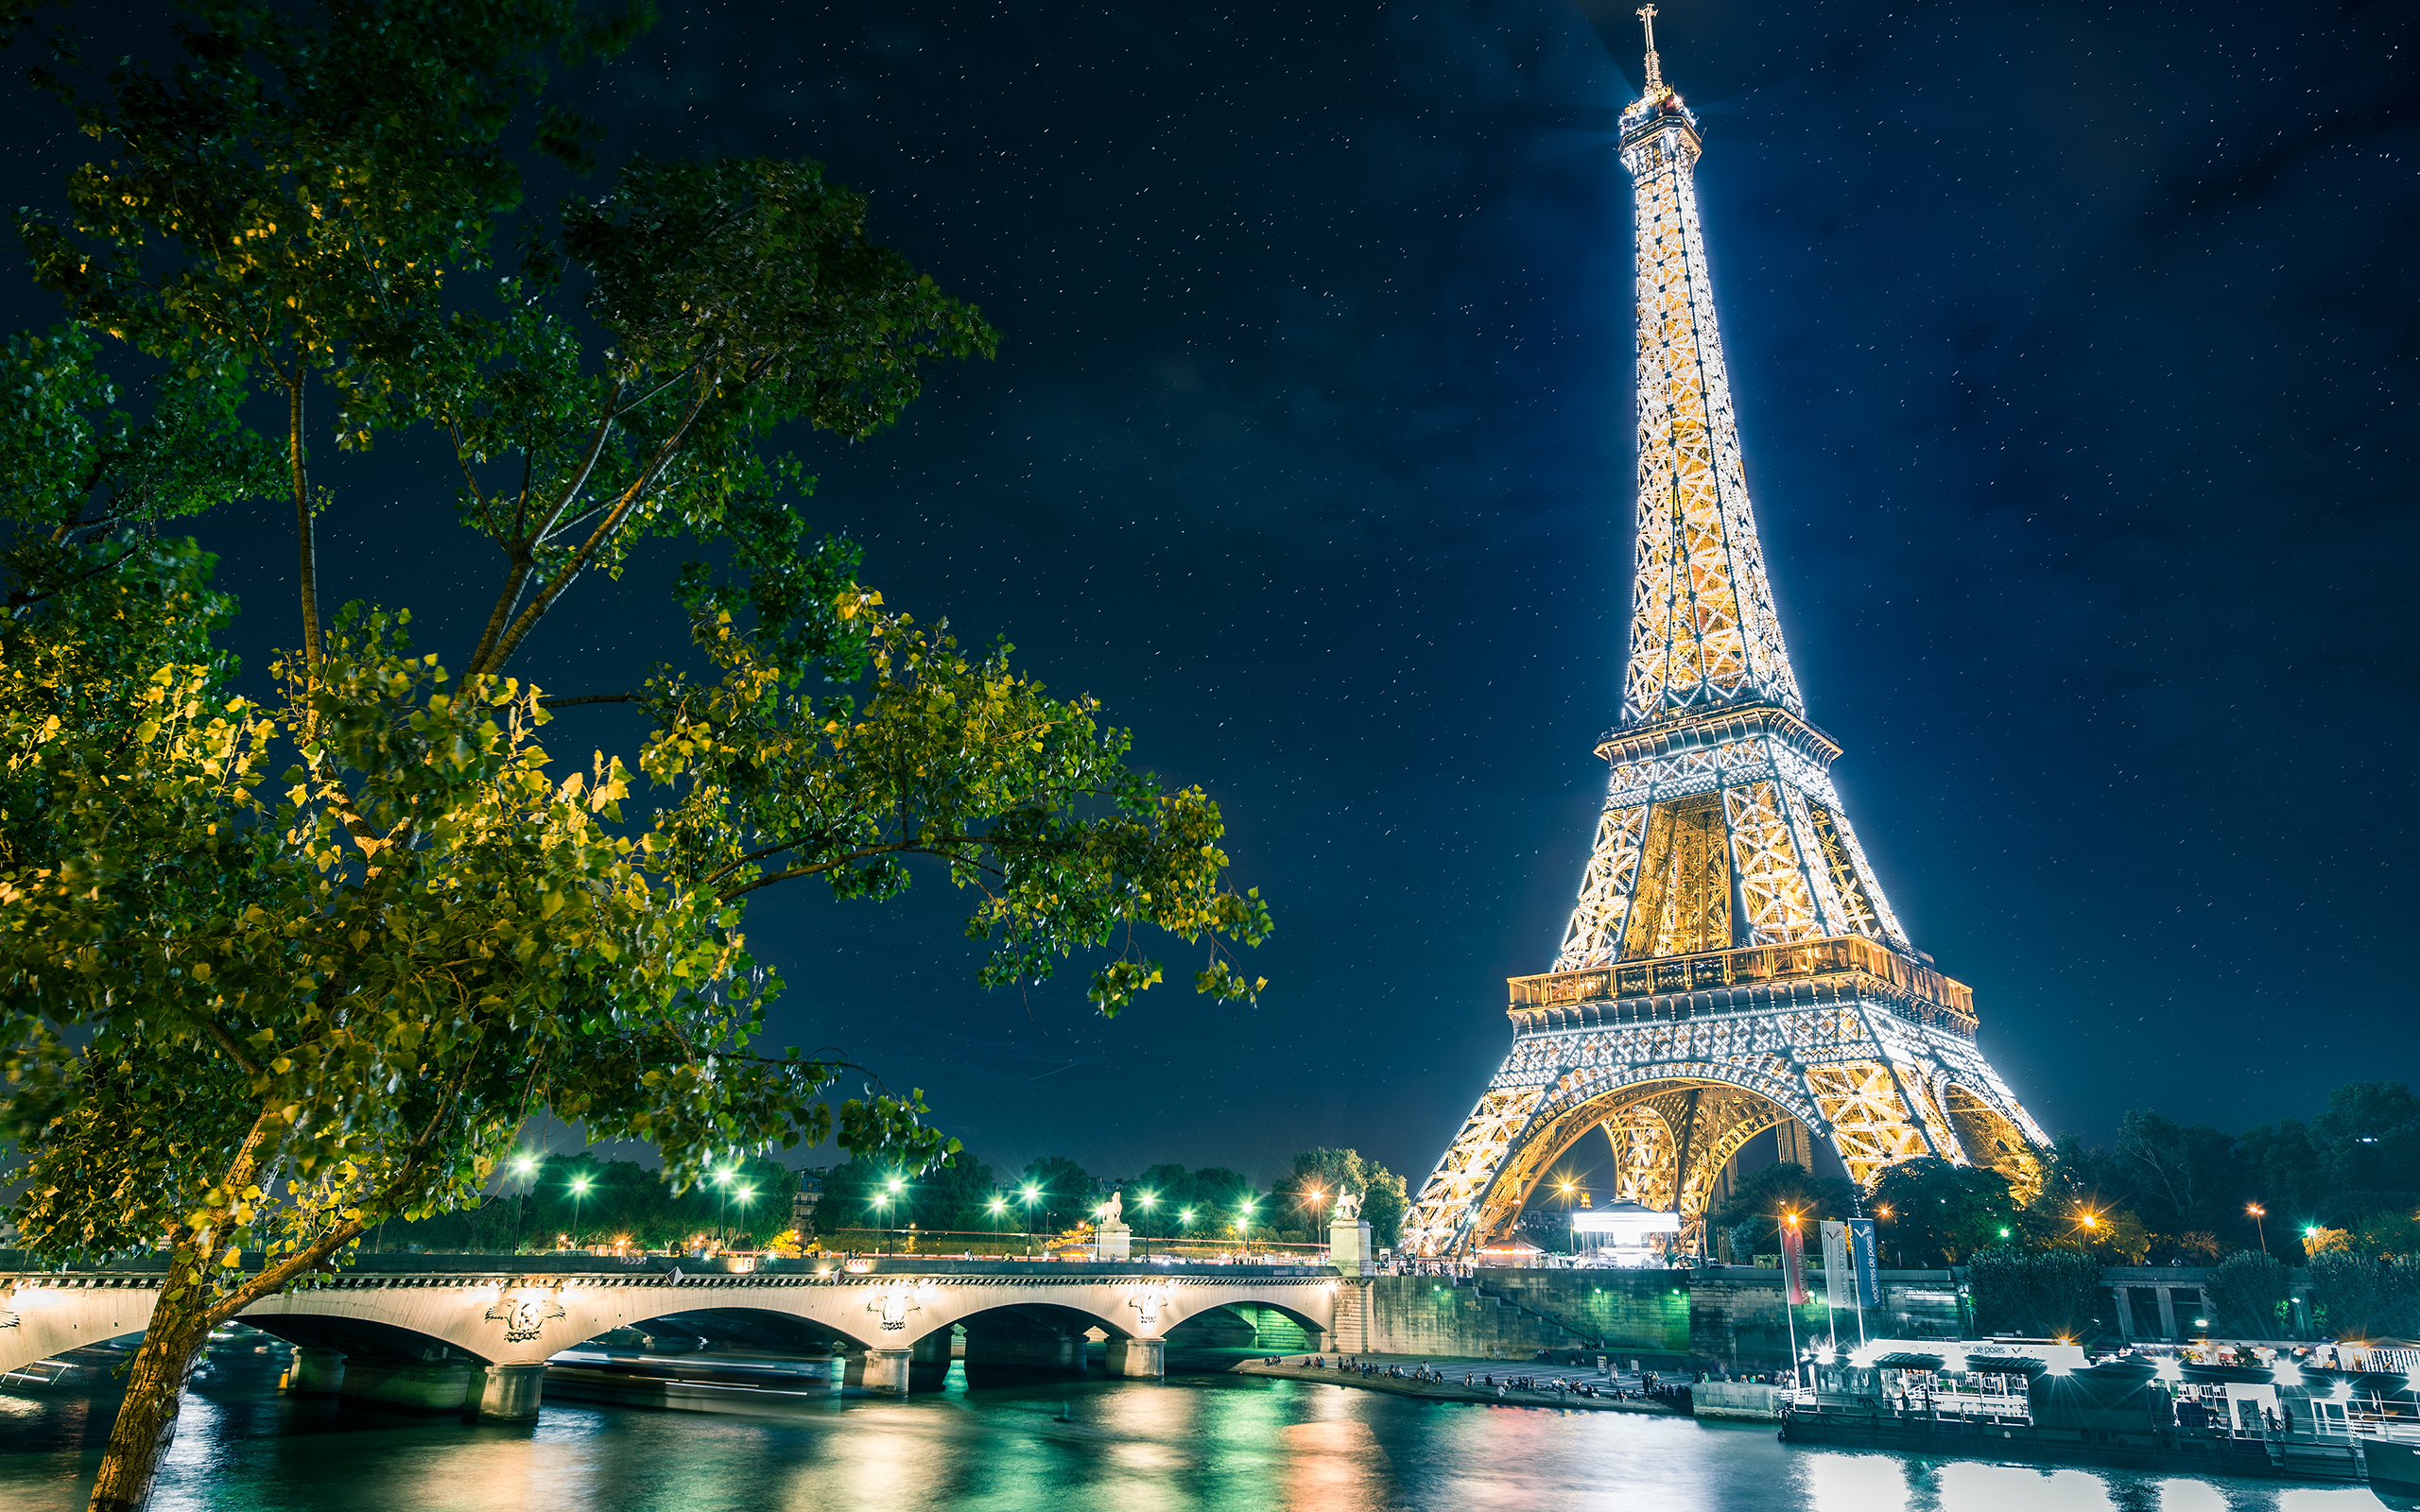 Fond Ecran Paris Tour Eiffel Illumin E Id Rubrique De L